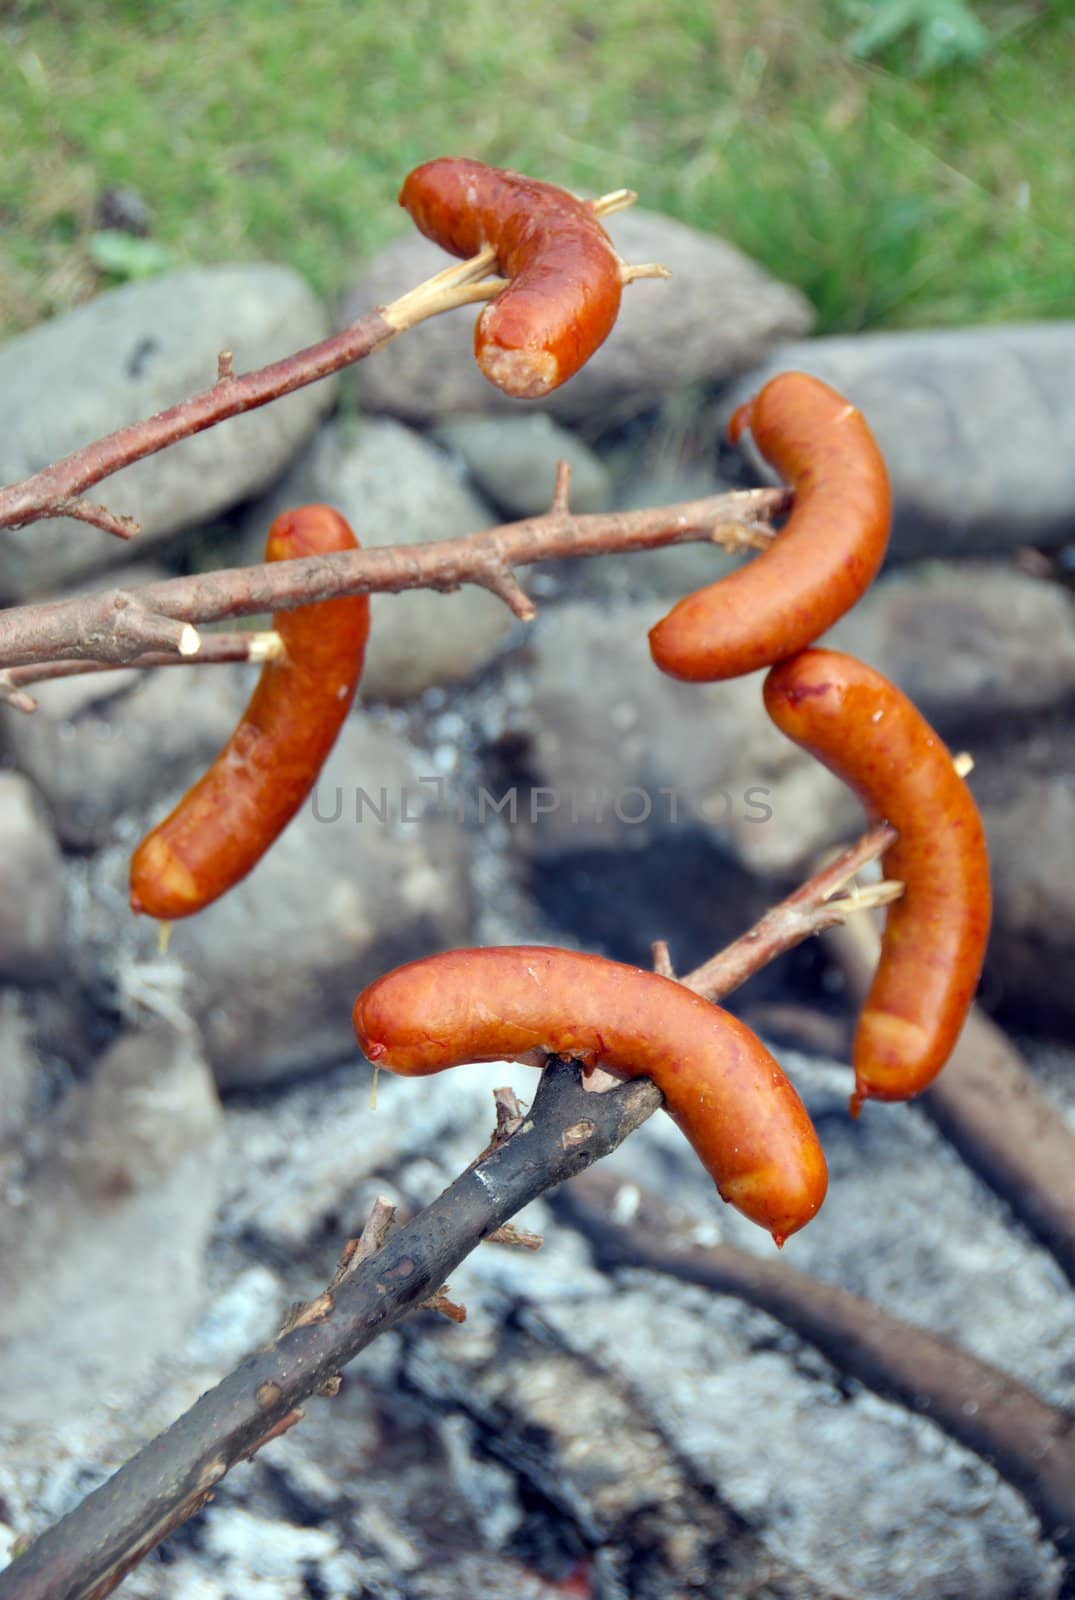  Sausage over Campfire